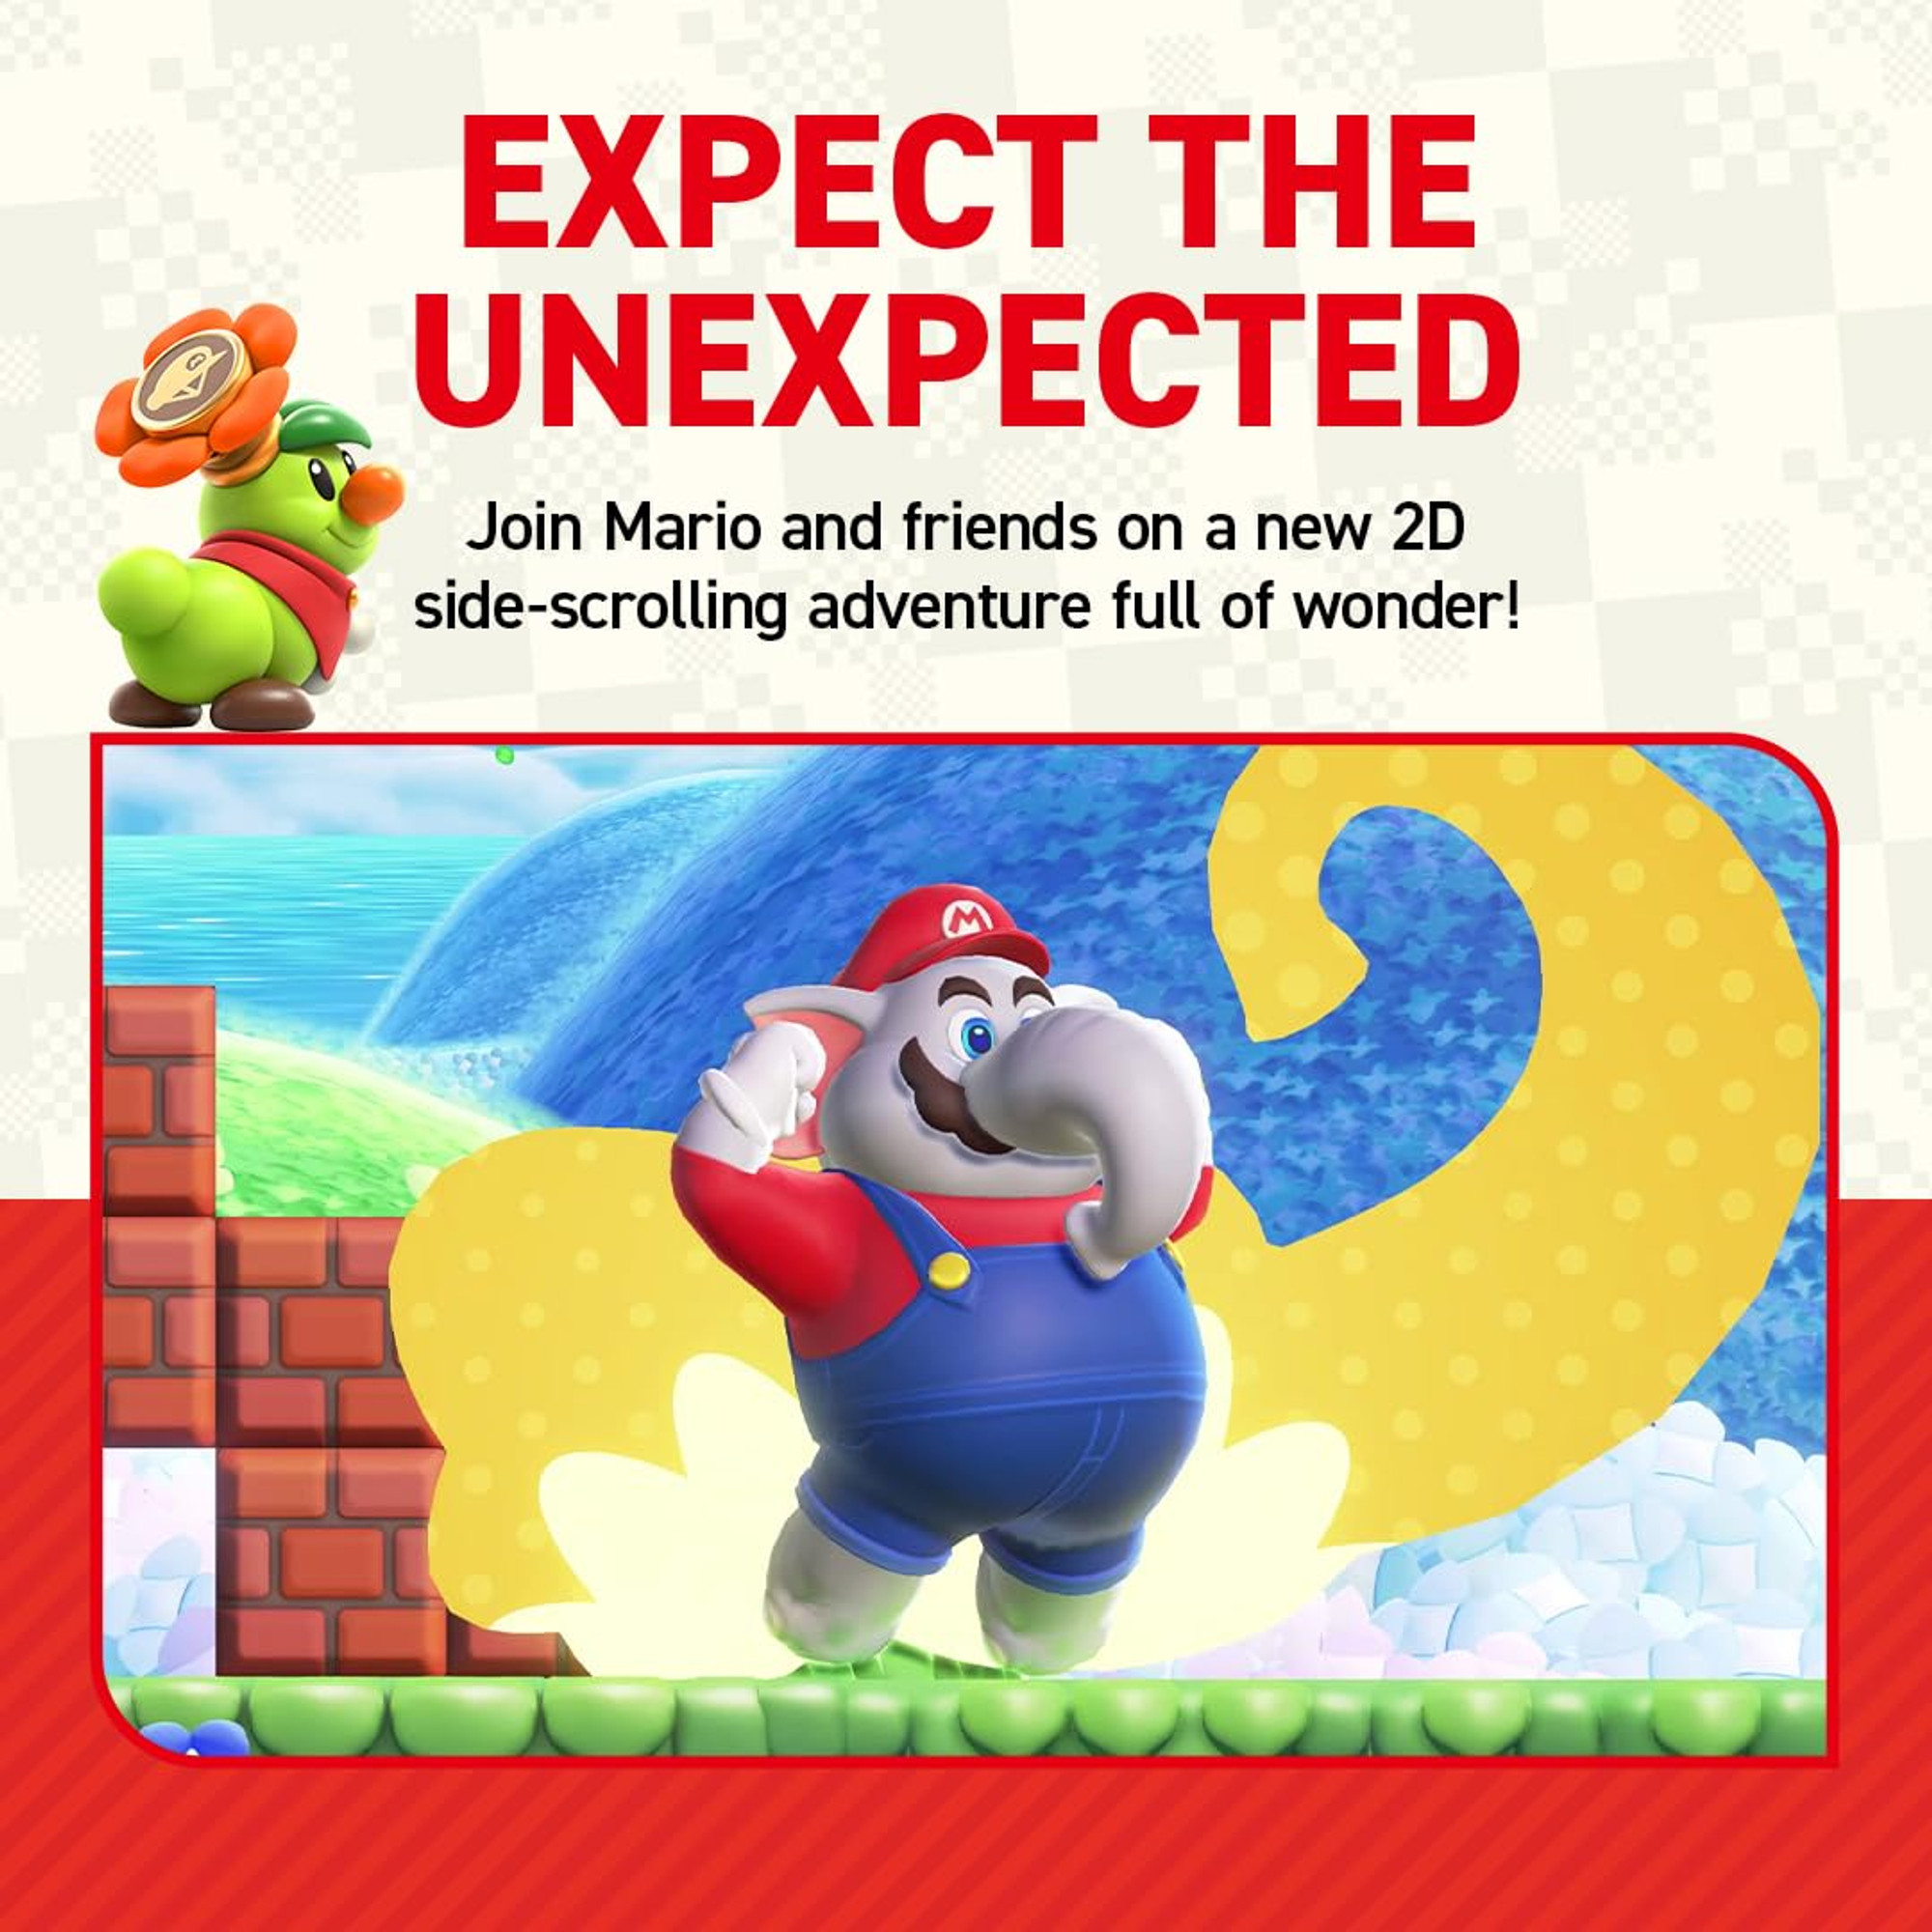 Super Mario Bros. Wonder - Nintendo Switch Brand New Sealed - EU